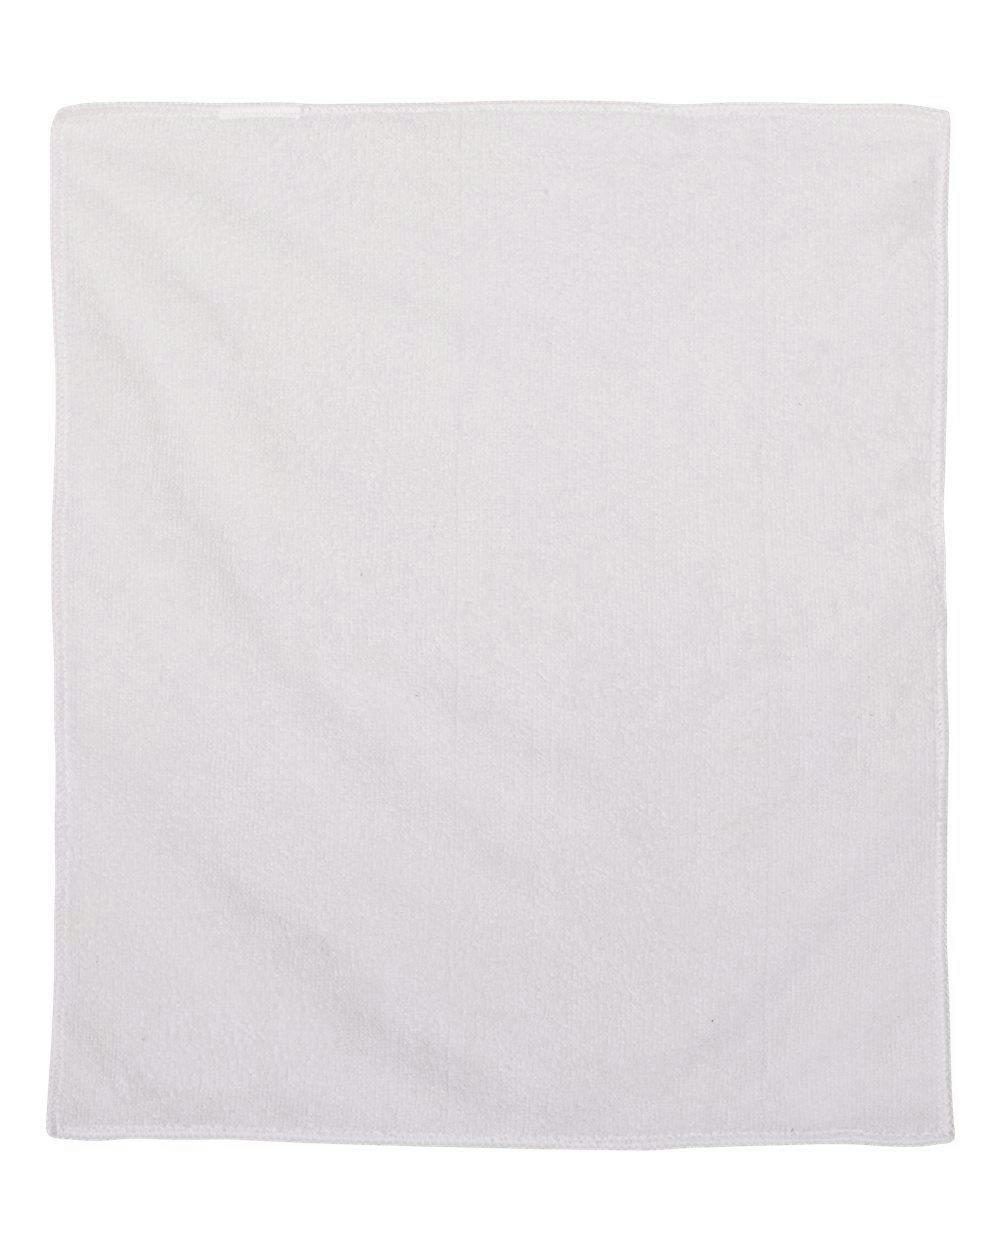 Image for Sublimation Towel - CSUB1518